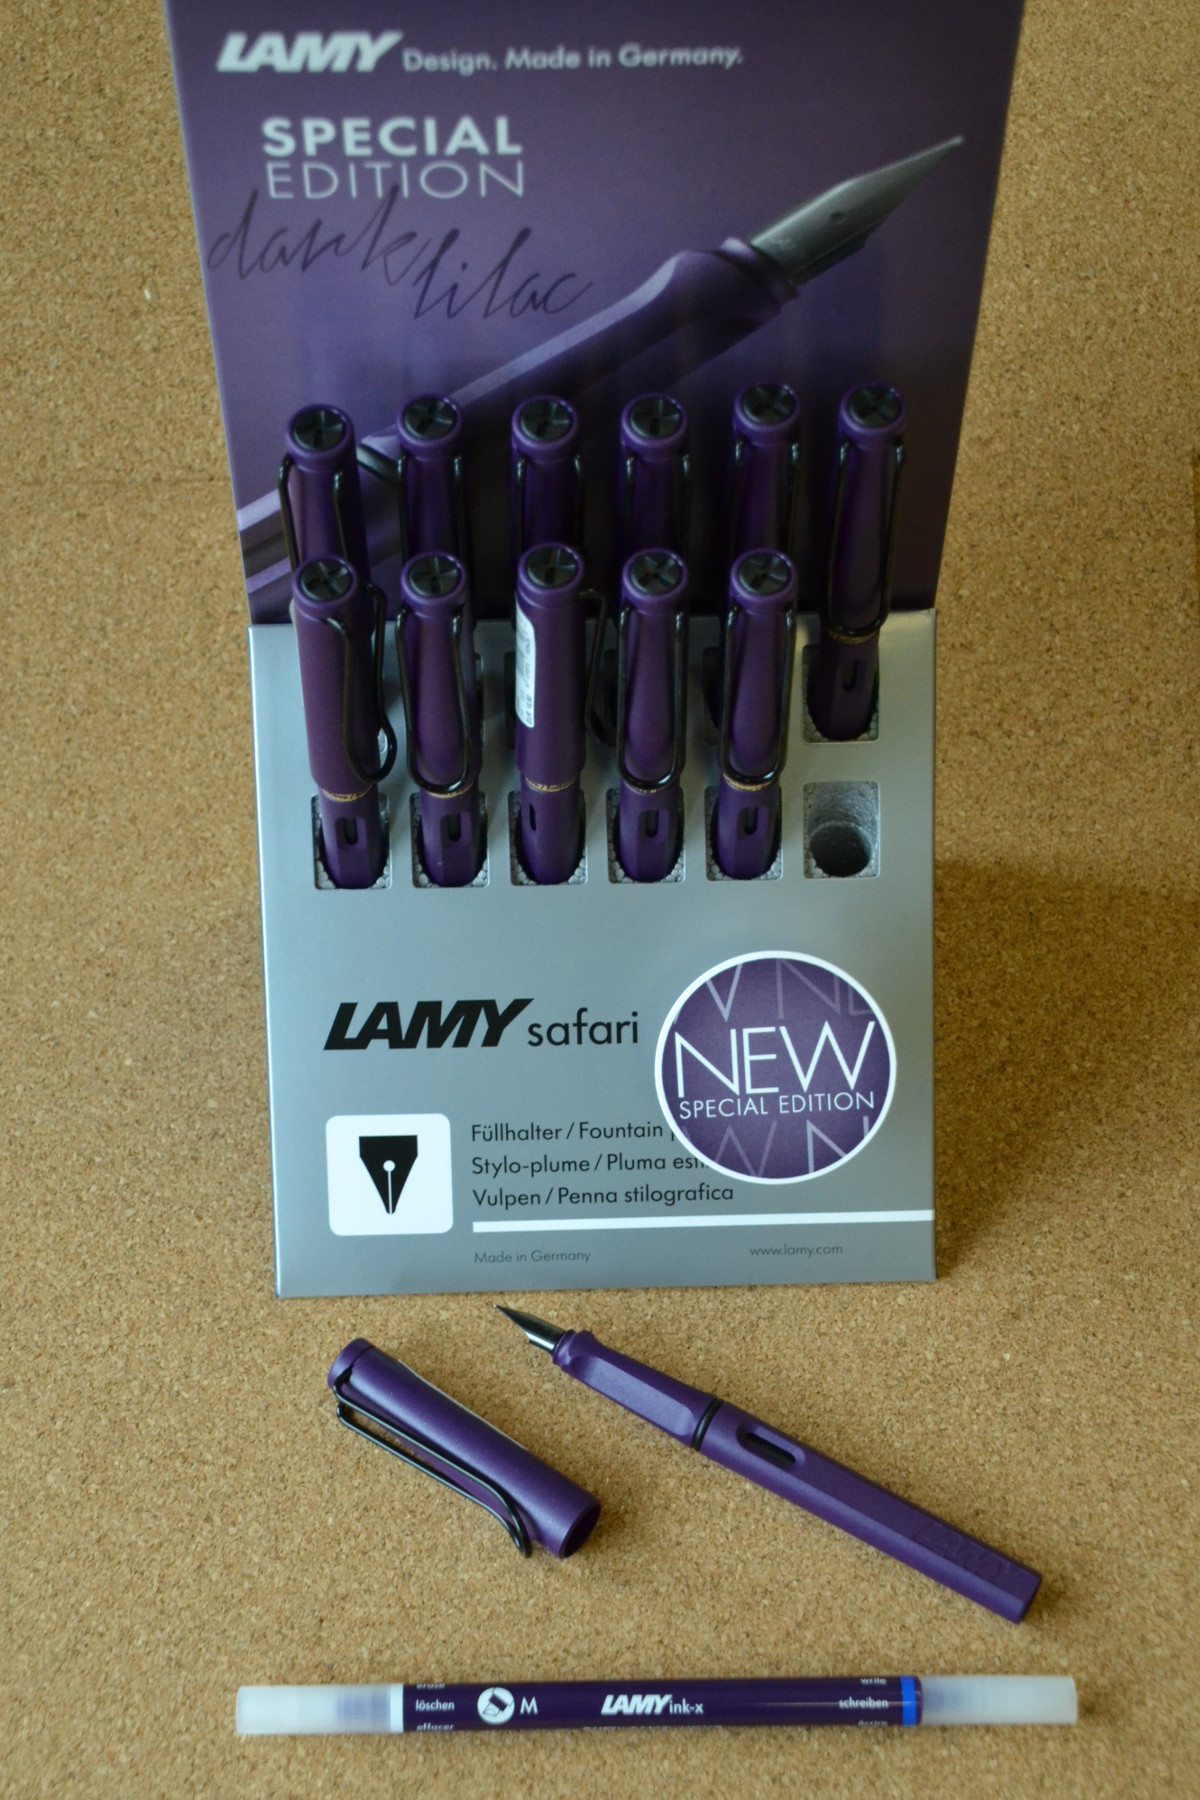 SPECIAL EDTION - Lamy safari dark lilac